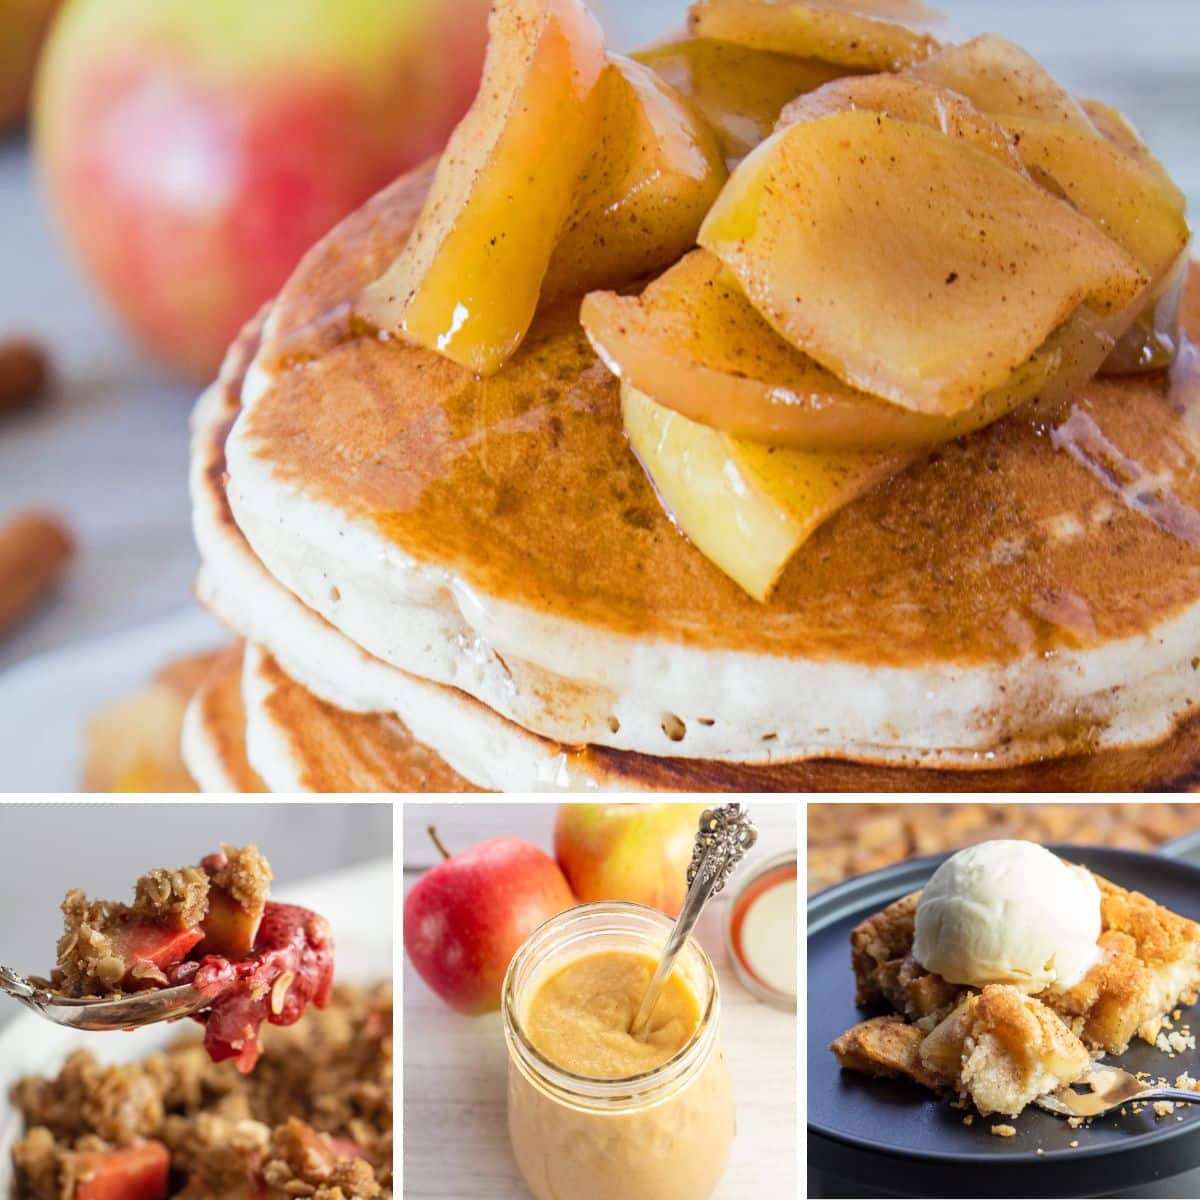 Resep apel terbaik untuk dibuat dan dinikmati setiap hari dalam seminggu menampilkan 4 resep dalam gambar kolase.